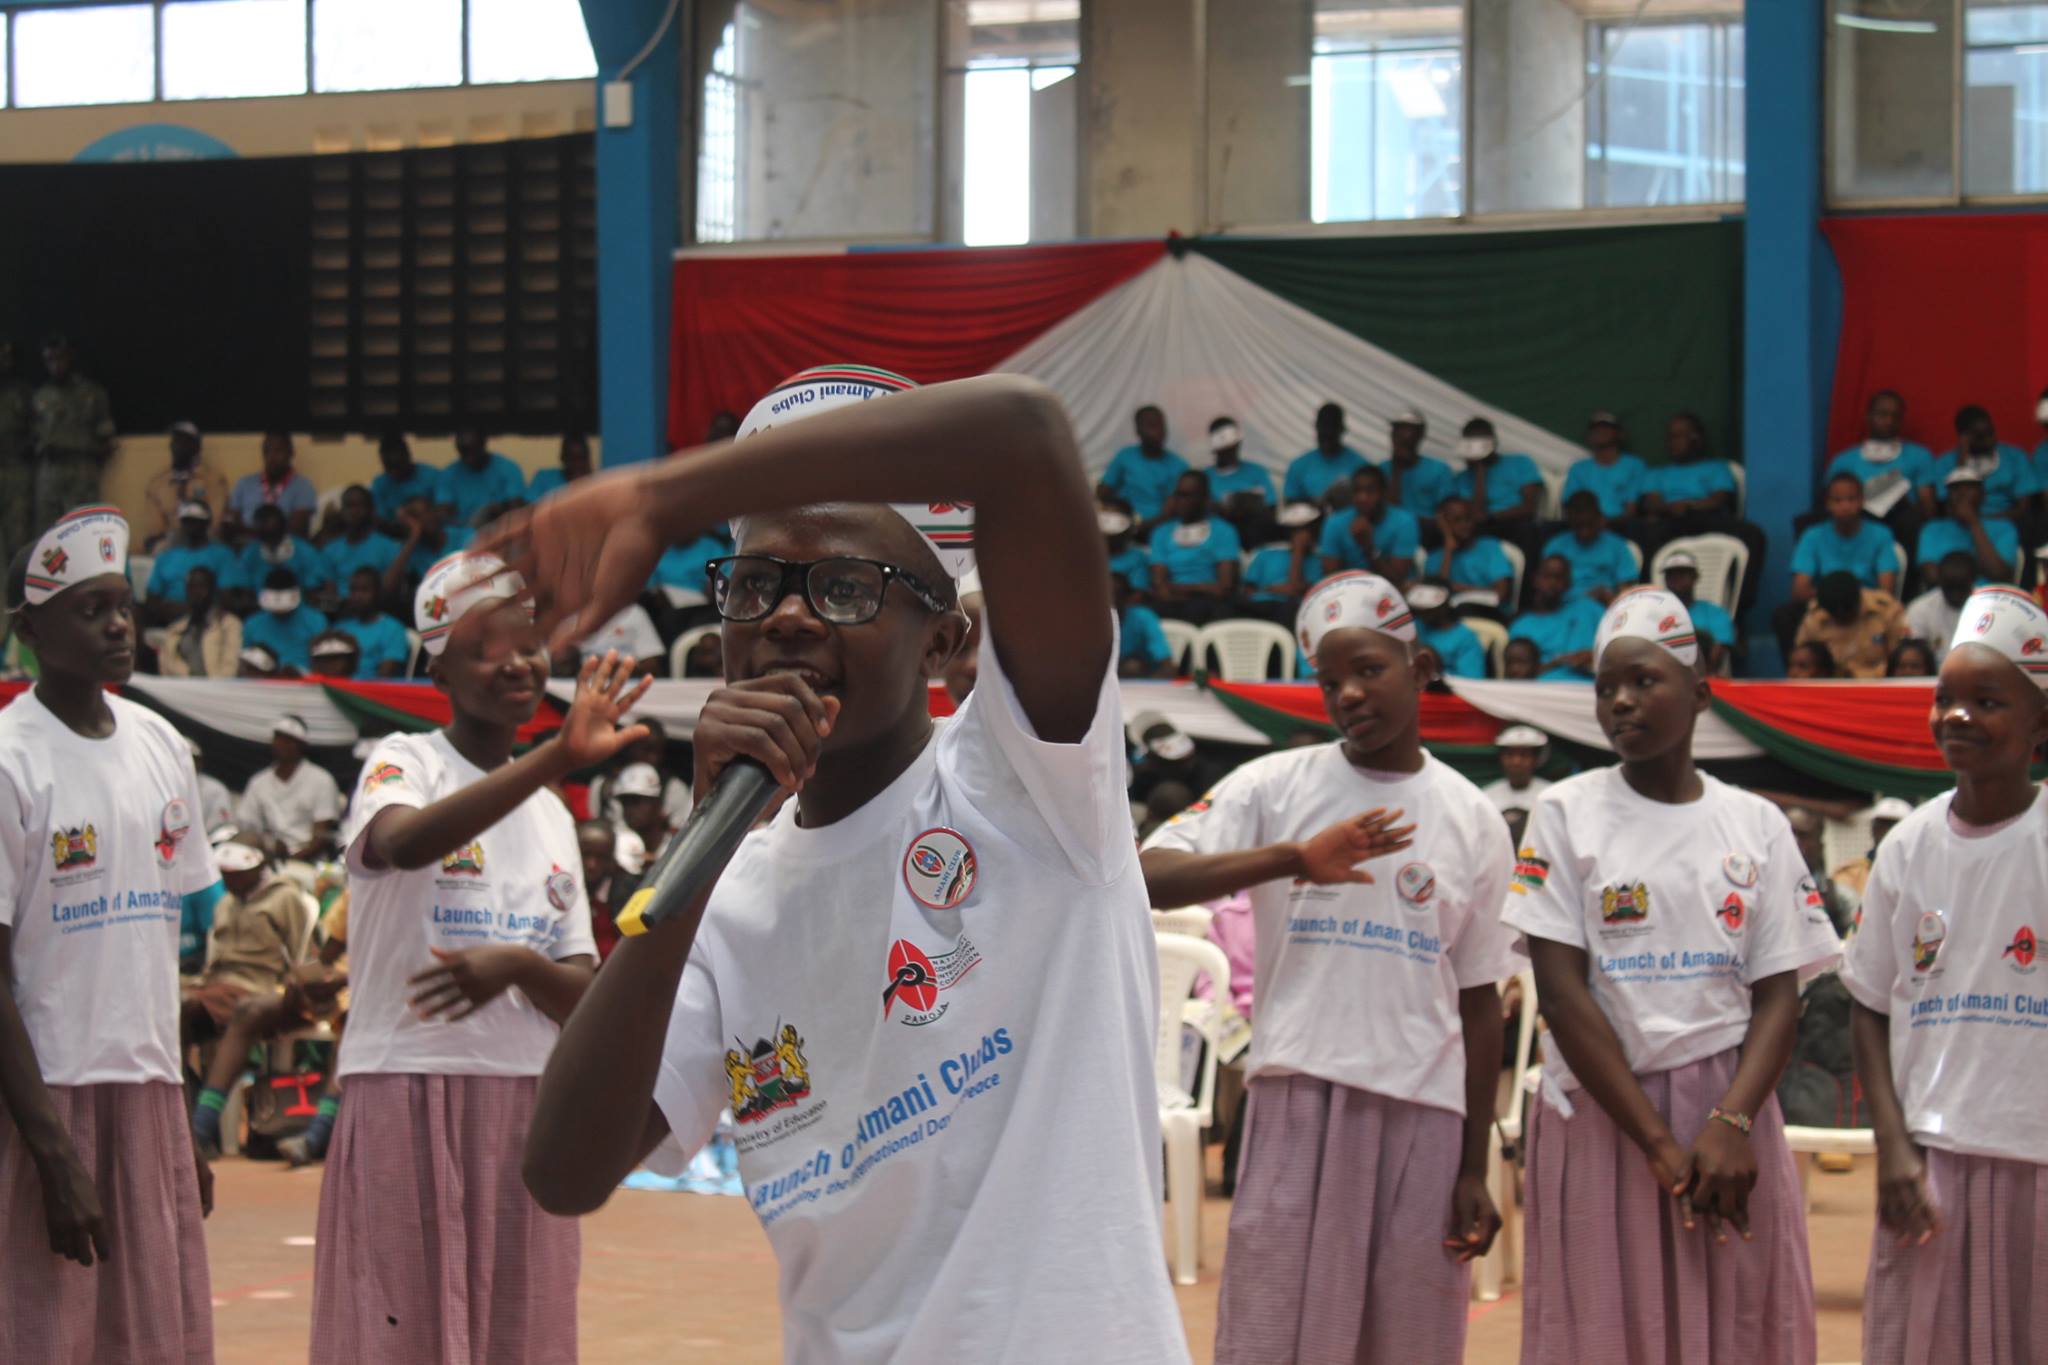 Kenyan youth celebrate at Festival